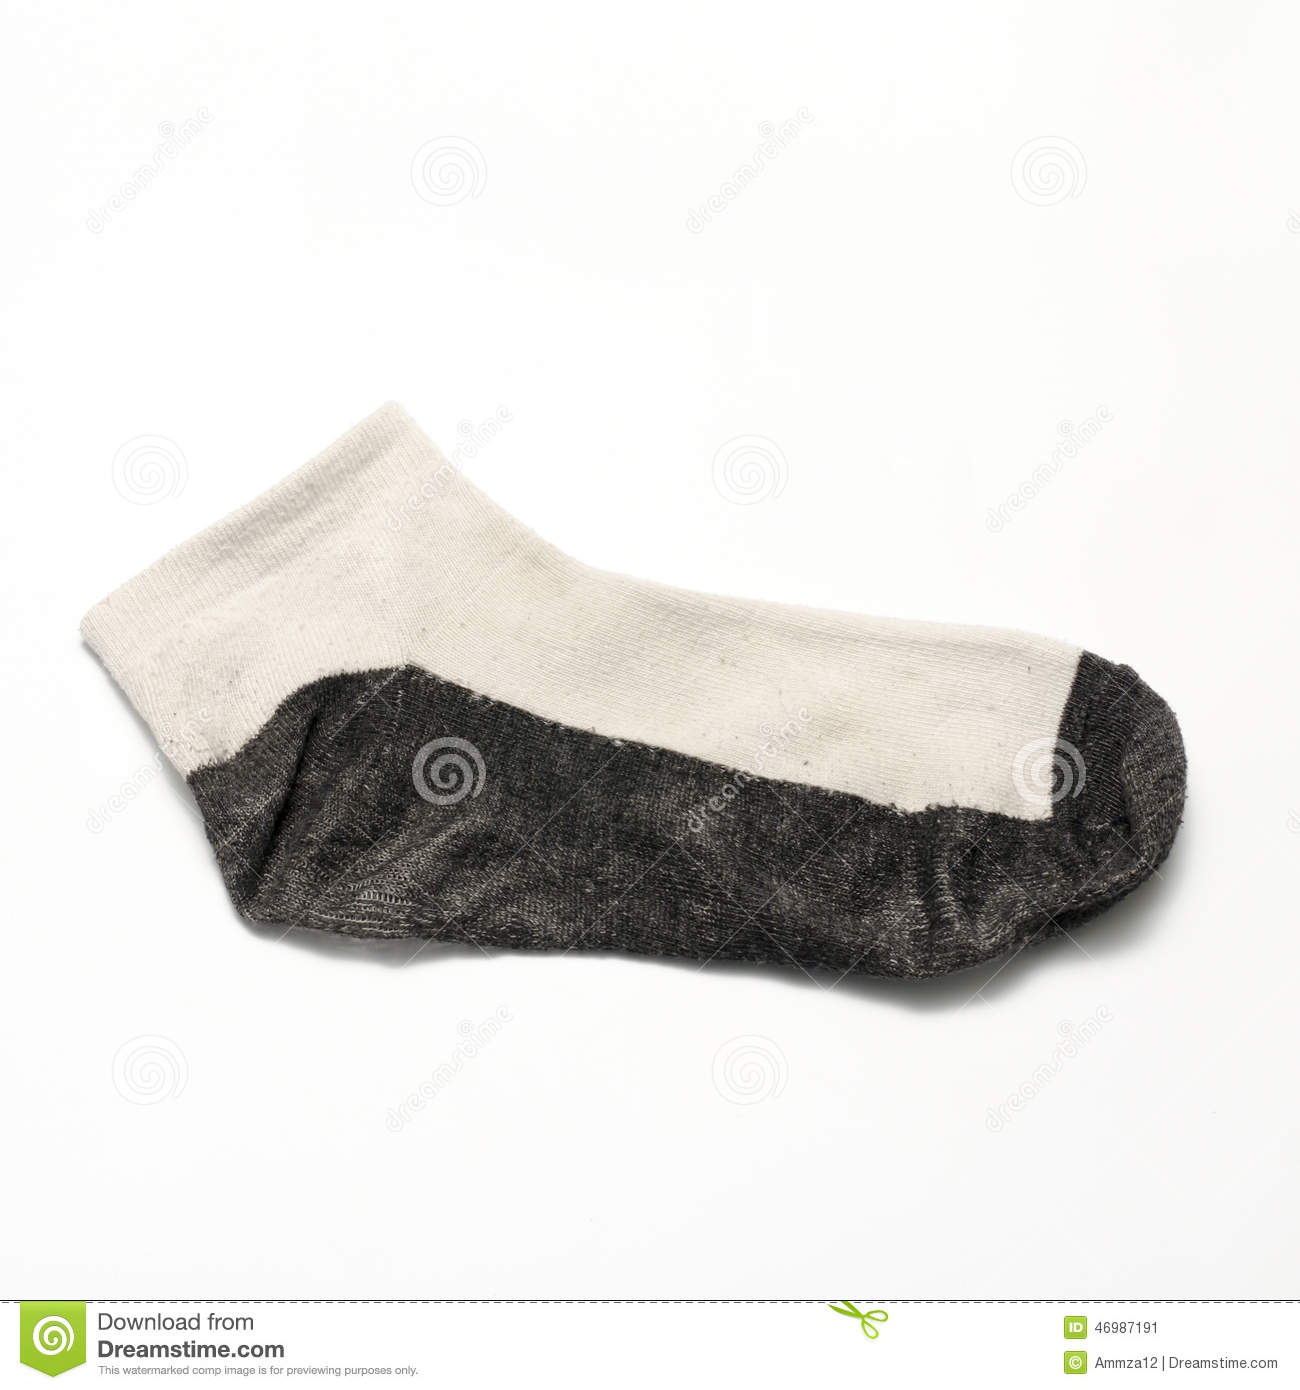 Sock On A White Background Mr No Pr No 1 56 0